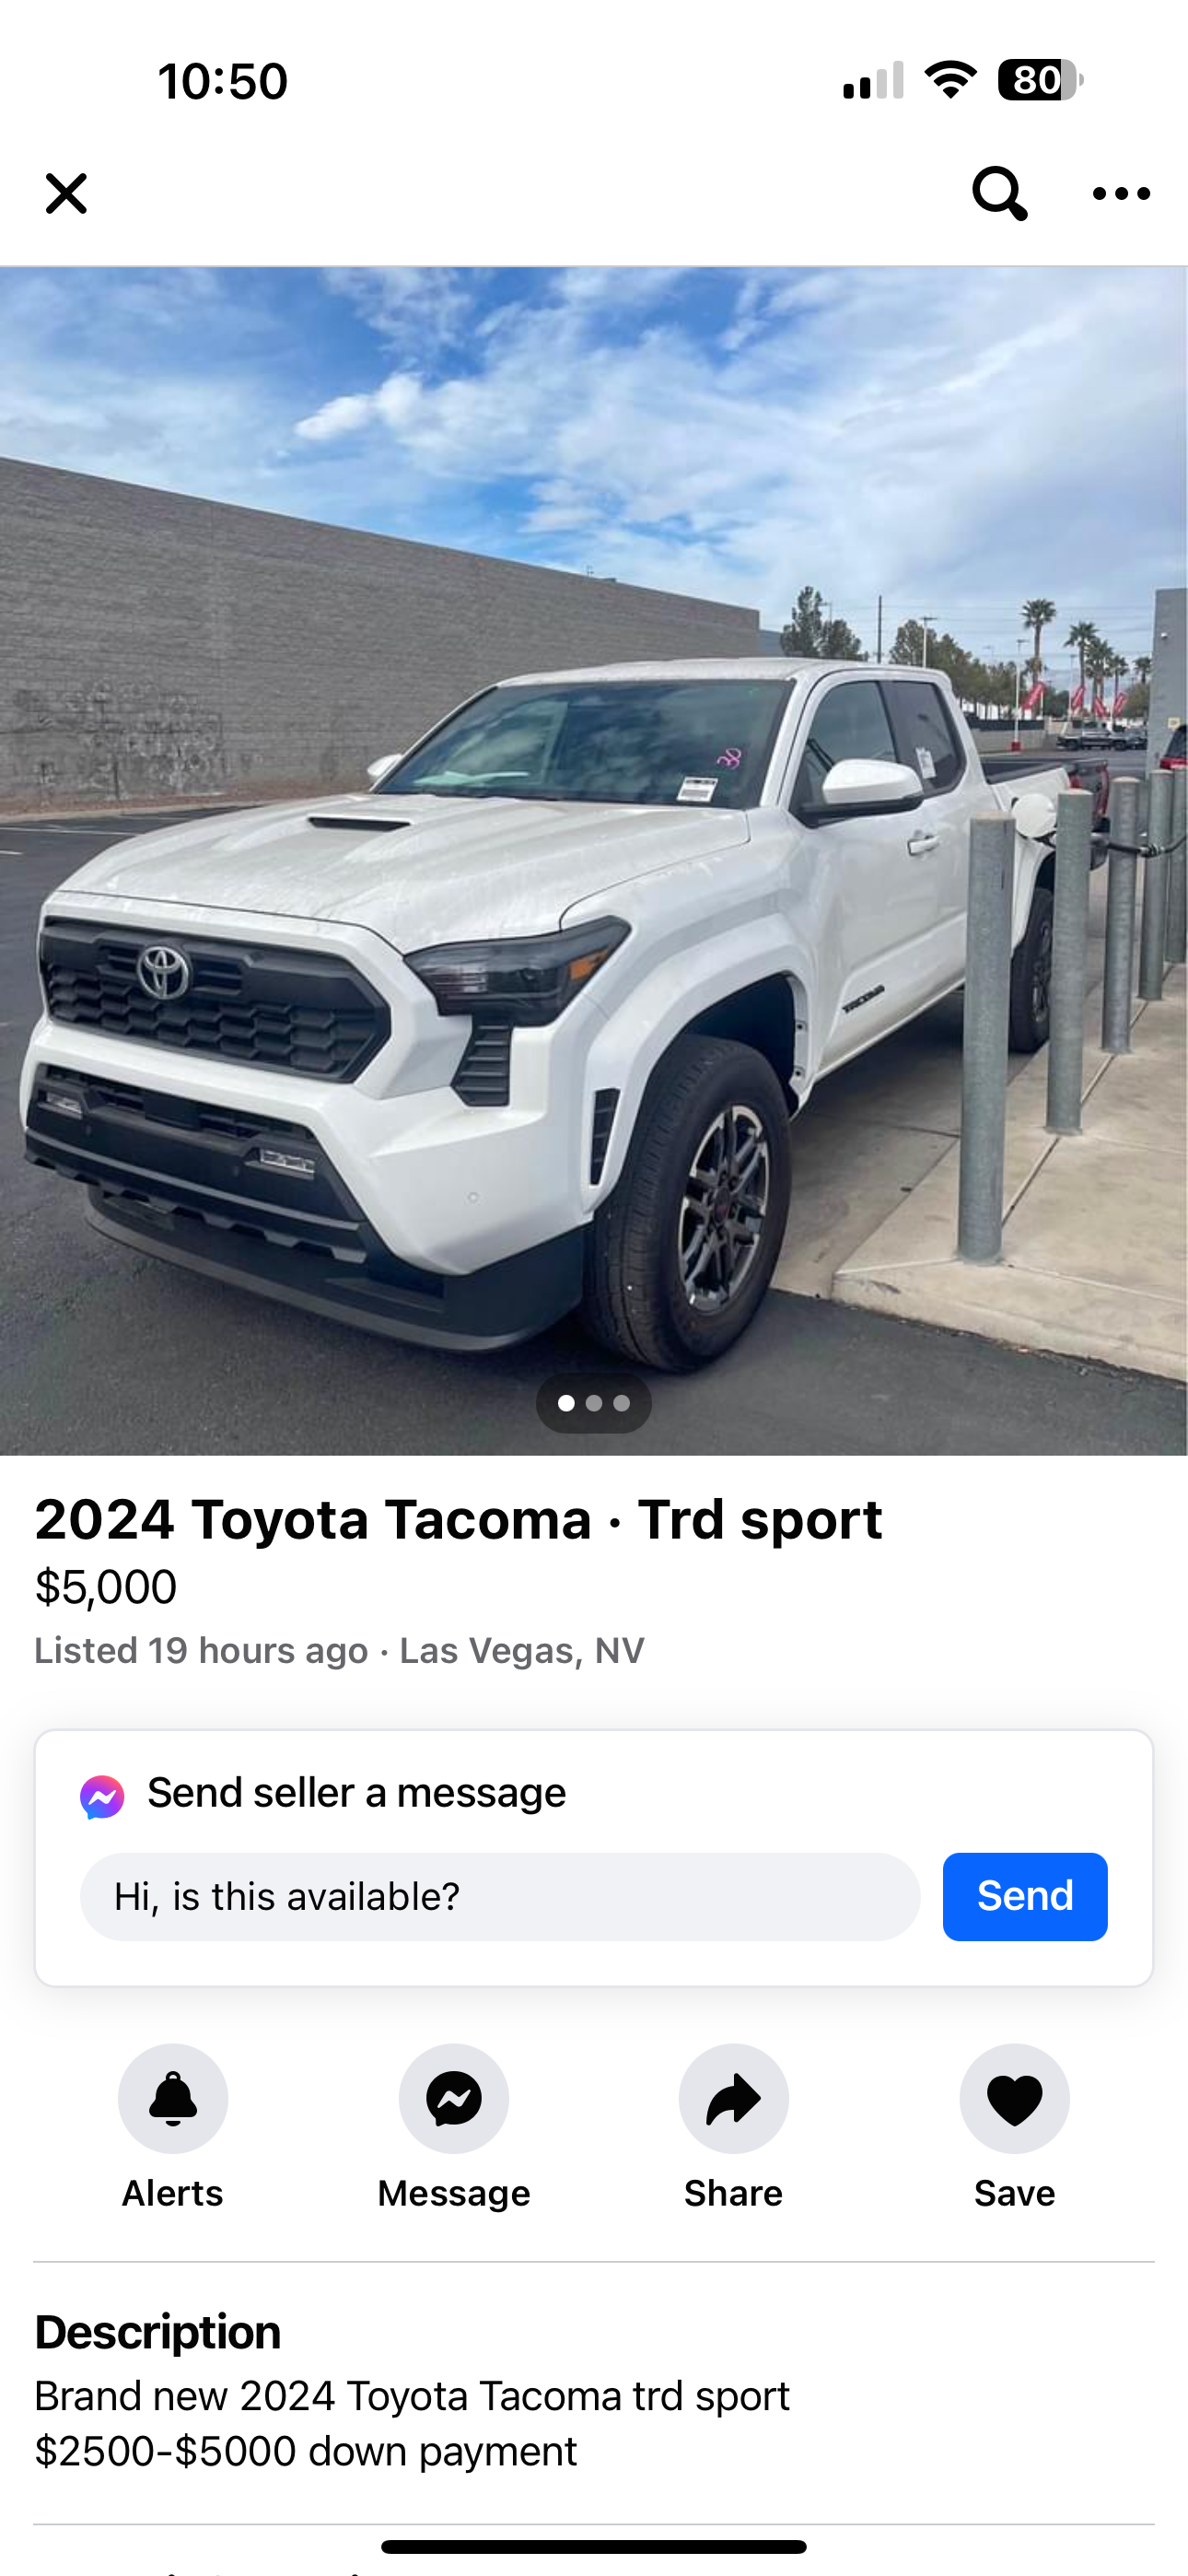 2024 Tacoma Updates of 2024 Tacomas on dealer lots (dealership, pricing, photos) IMG_2528